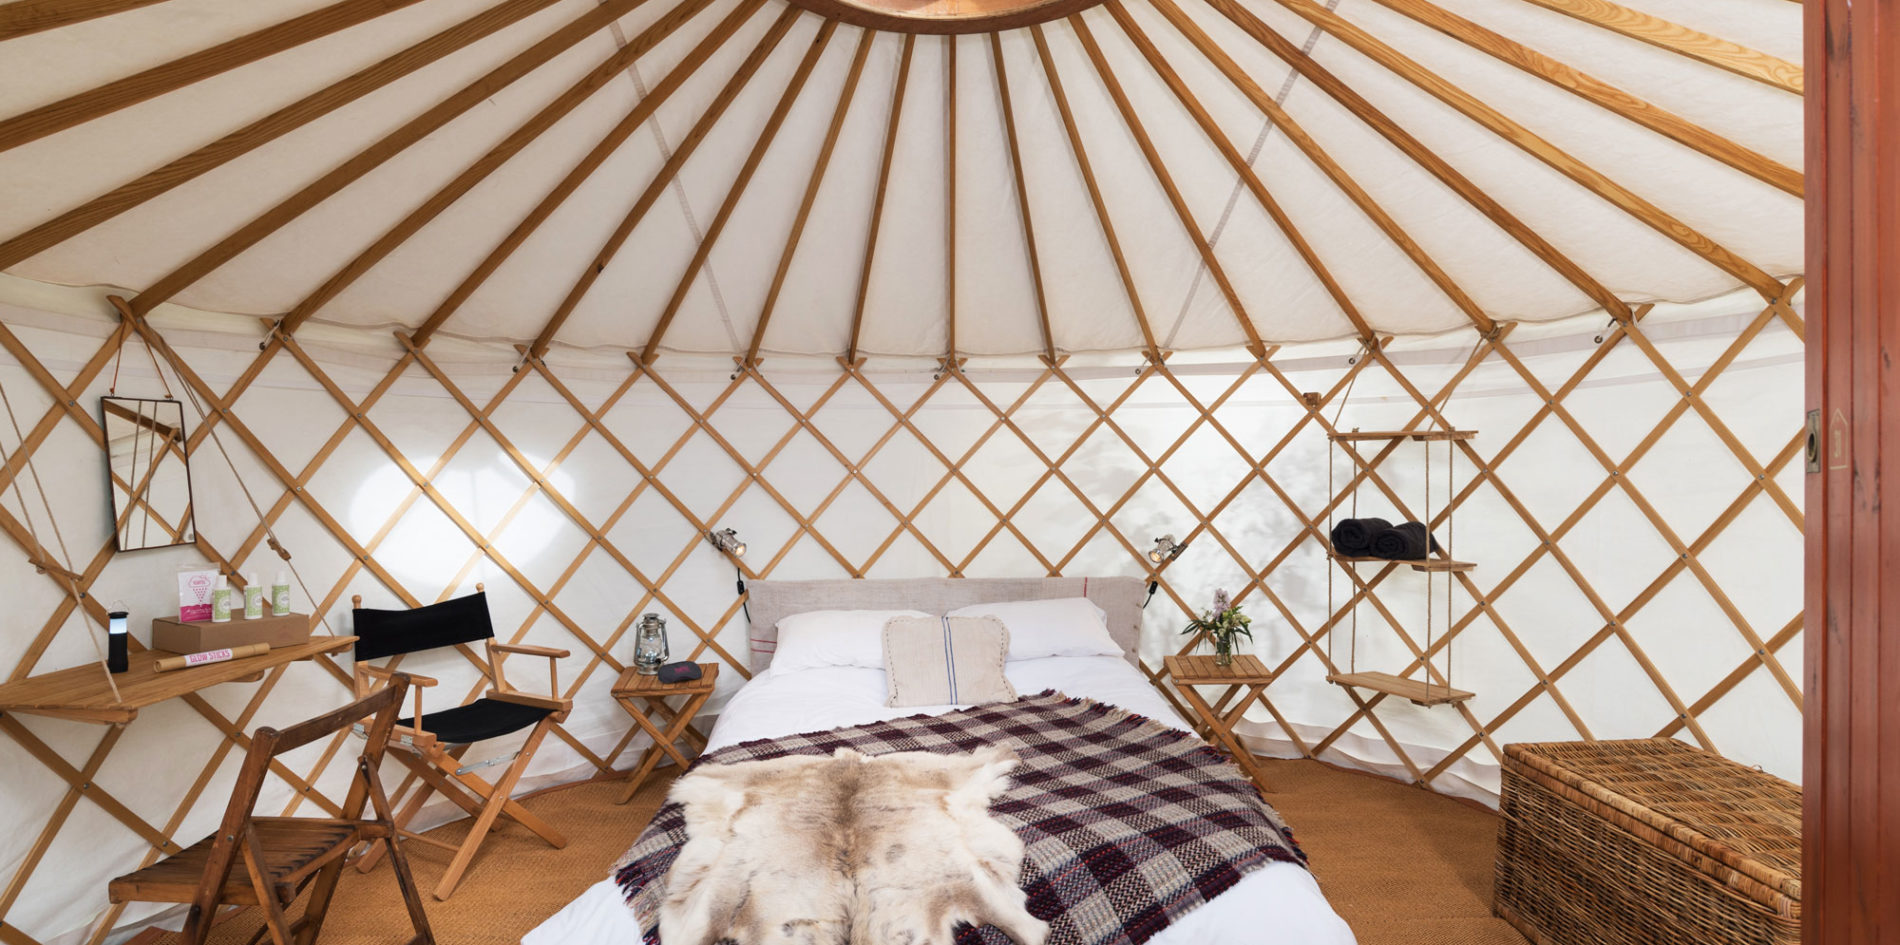 sleeping area details - luxury yurt camping accommodation